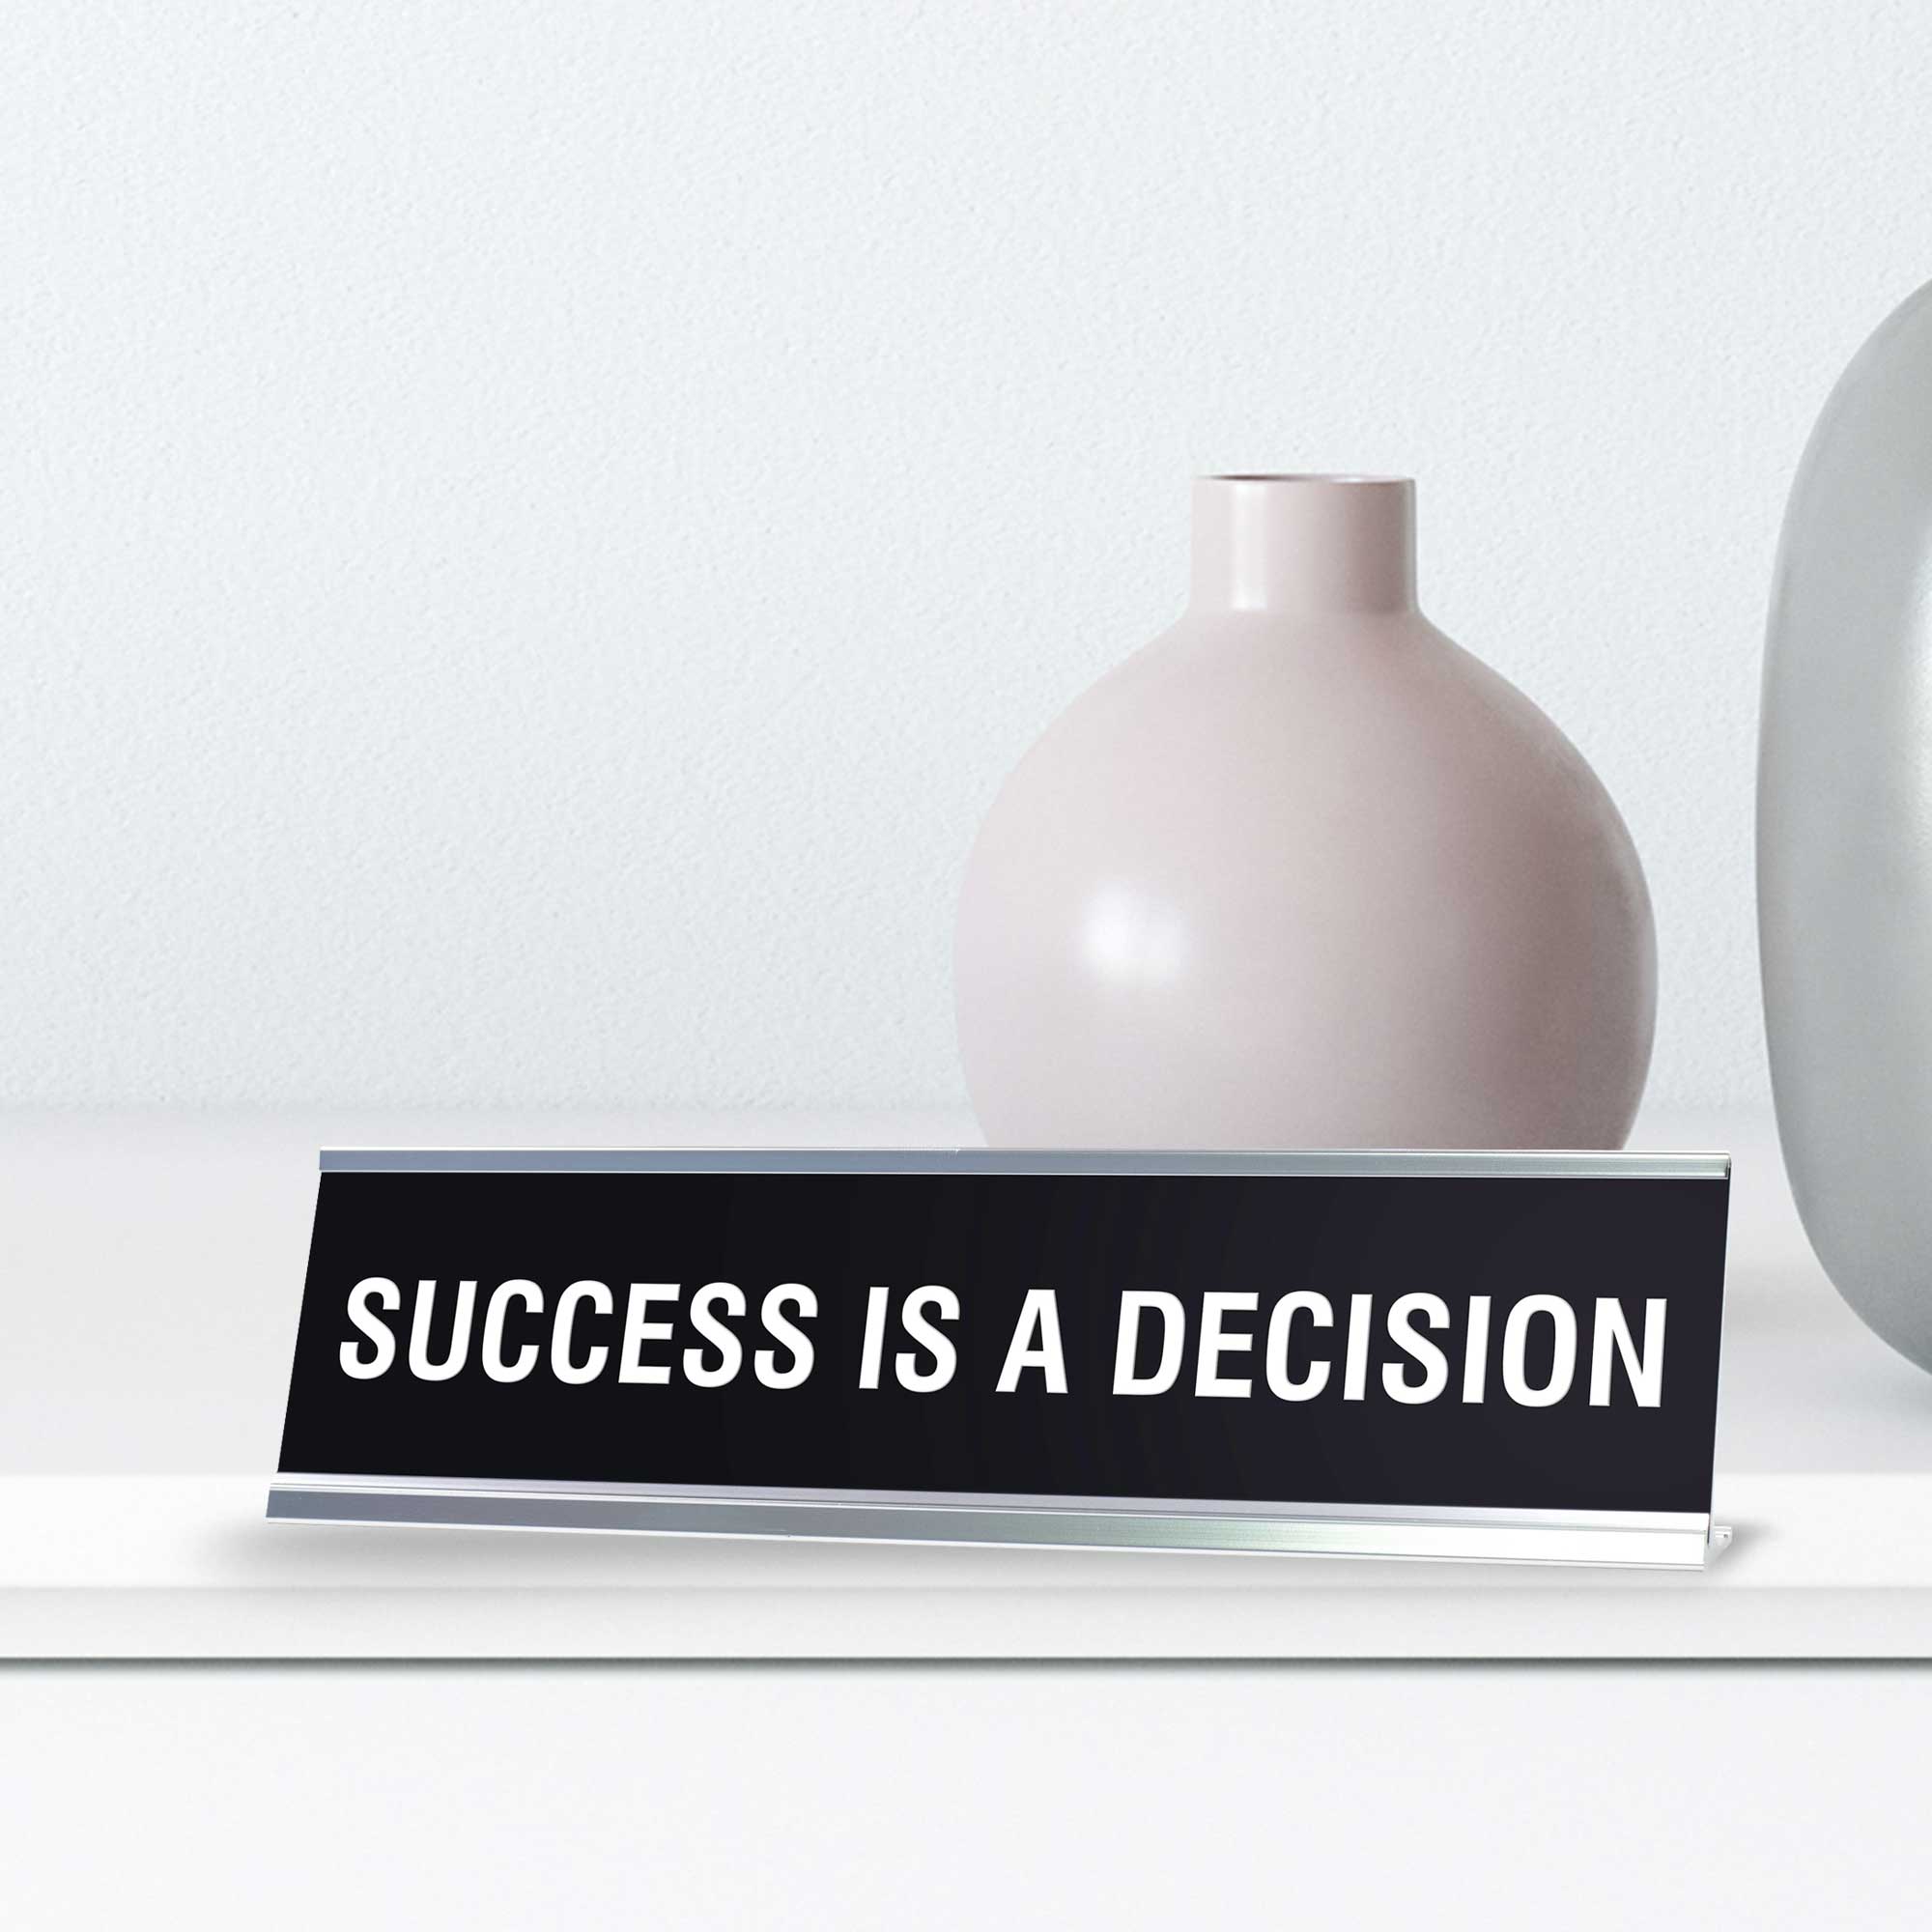 SUCCESS IS A DECISION Novelty Desk Sign